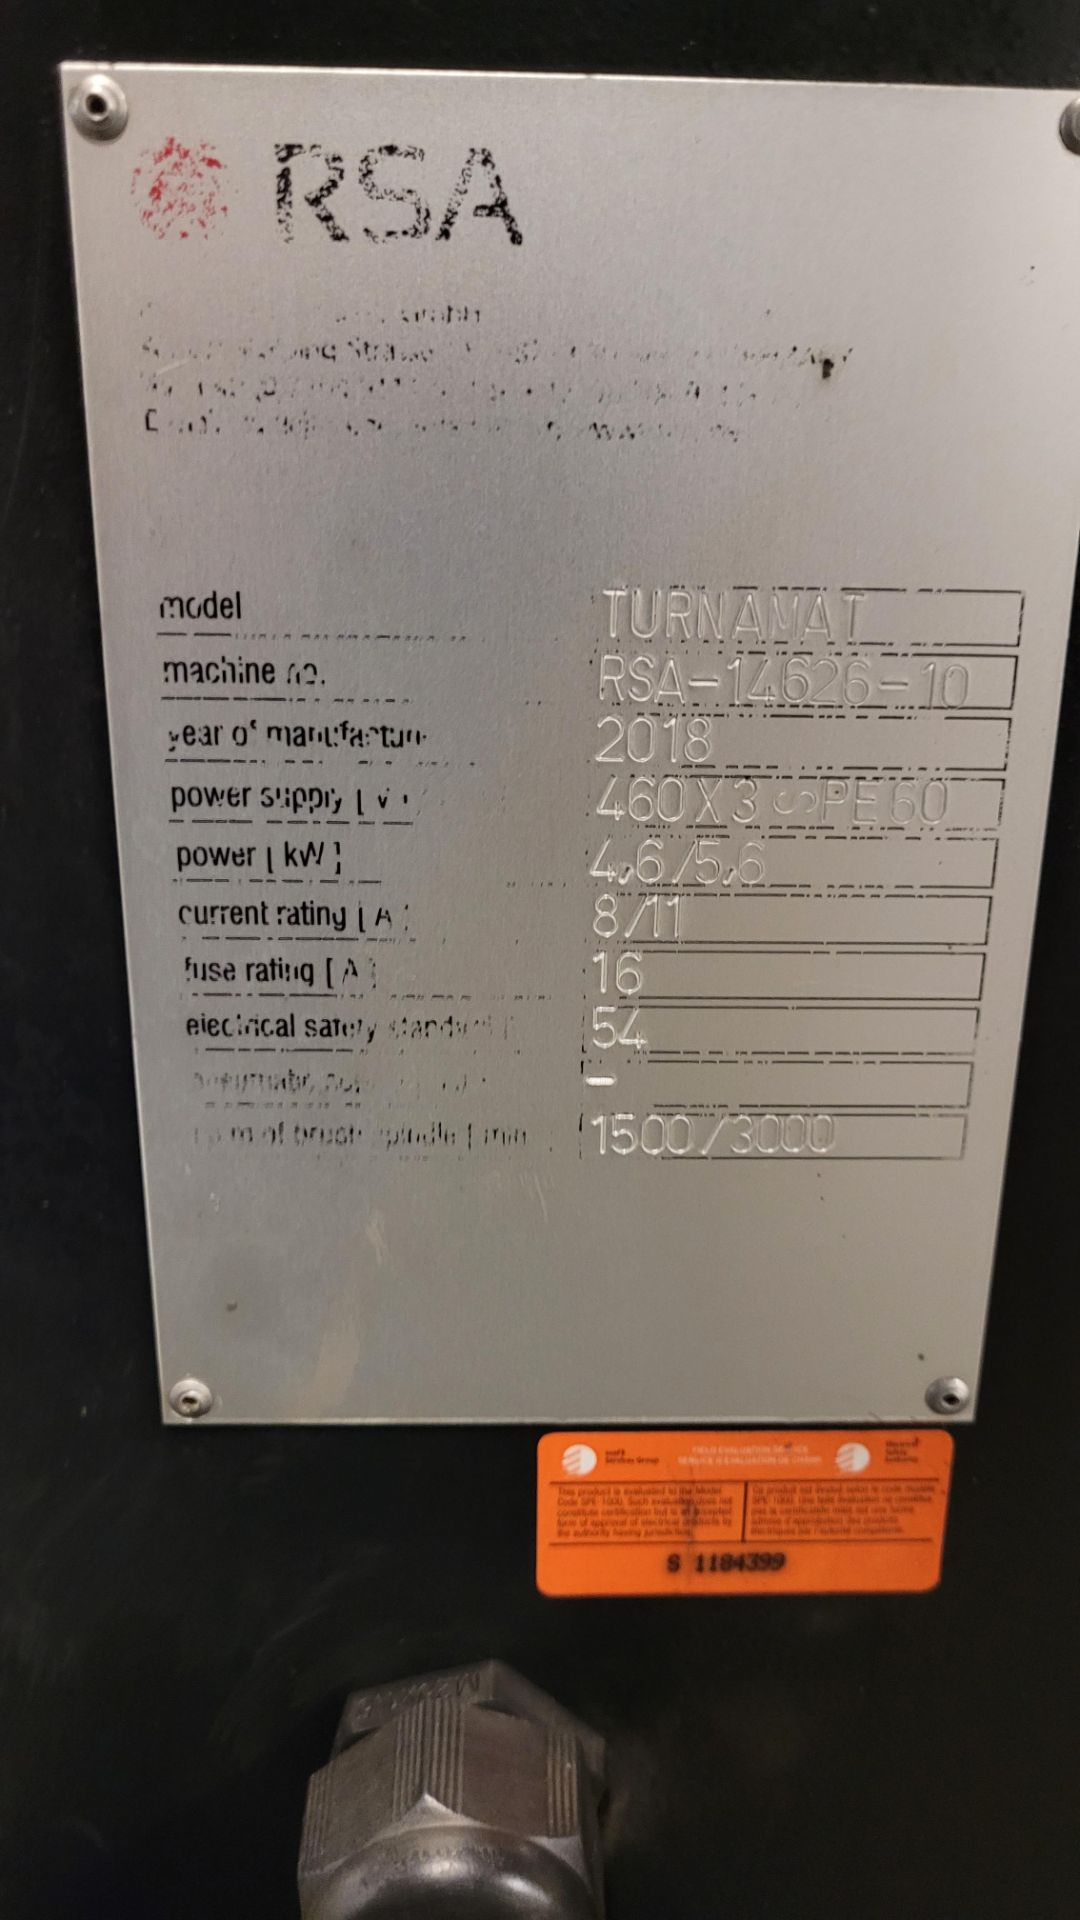 2018 RSA TURNAMAT DEBURRING MACHINE, 1,500 – 3,000 RPM, S/N RSA-14626-10 - Image 3 of 4